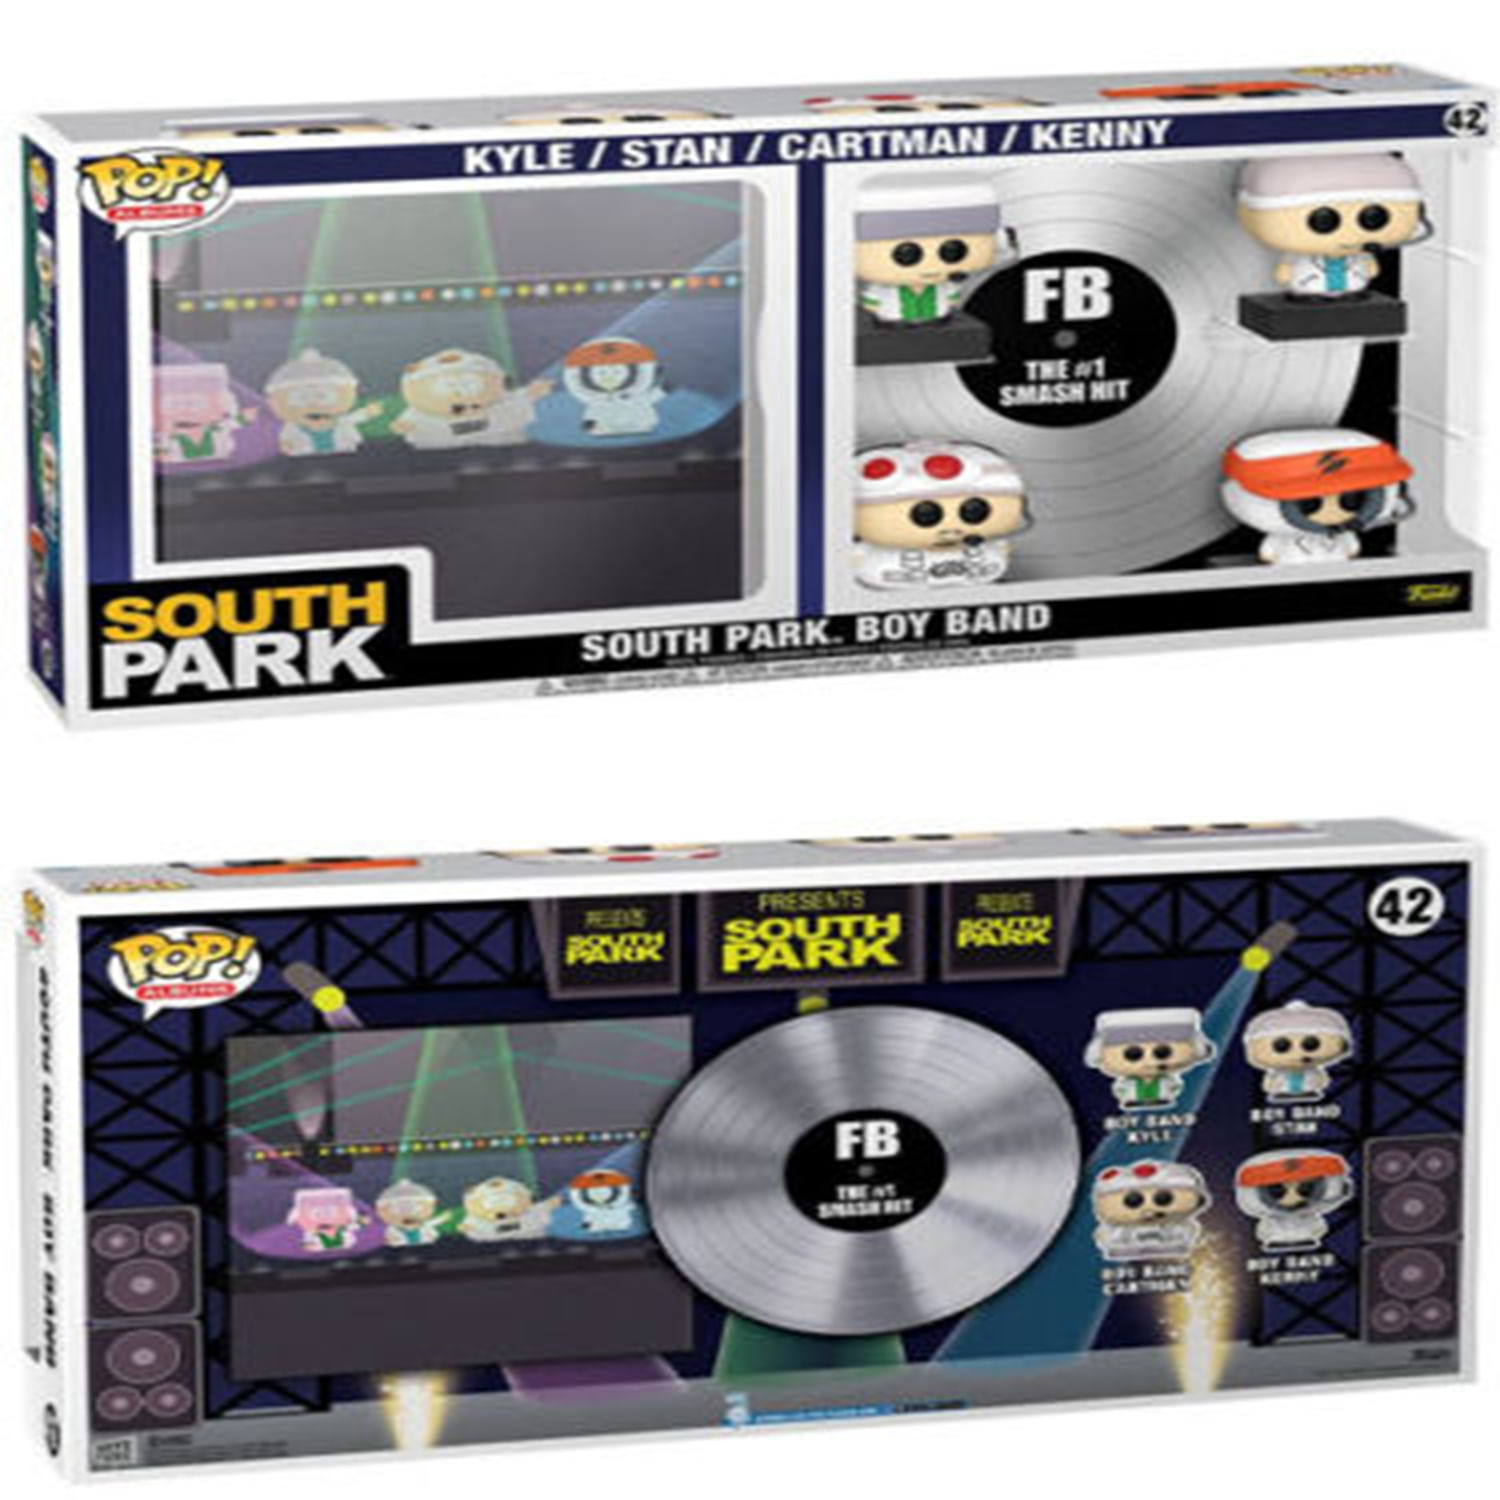 South Park Boy Band Deluxe Pop Album Figure 42 with Case